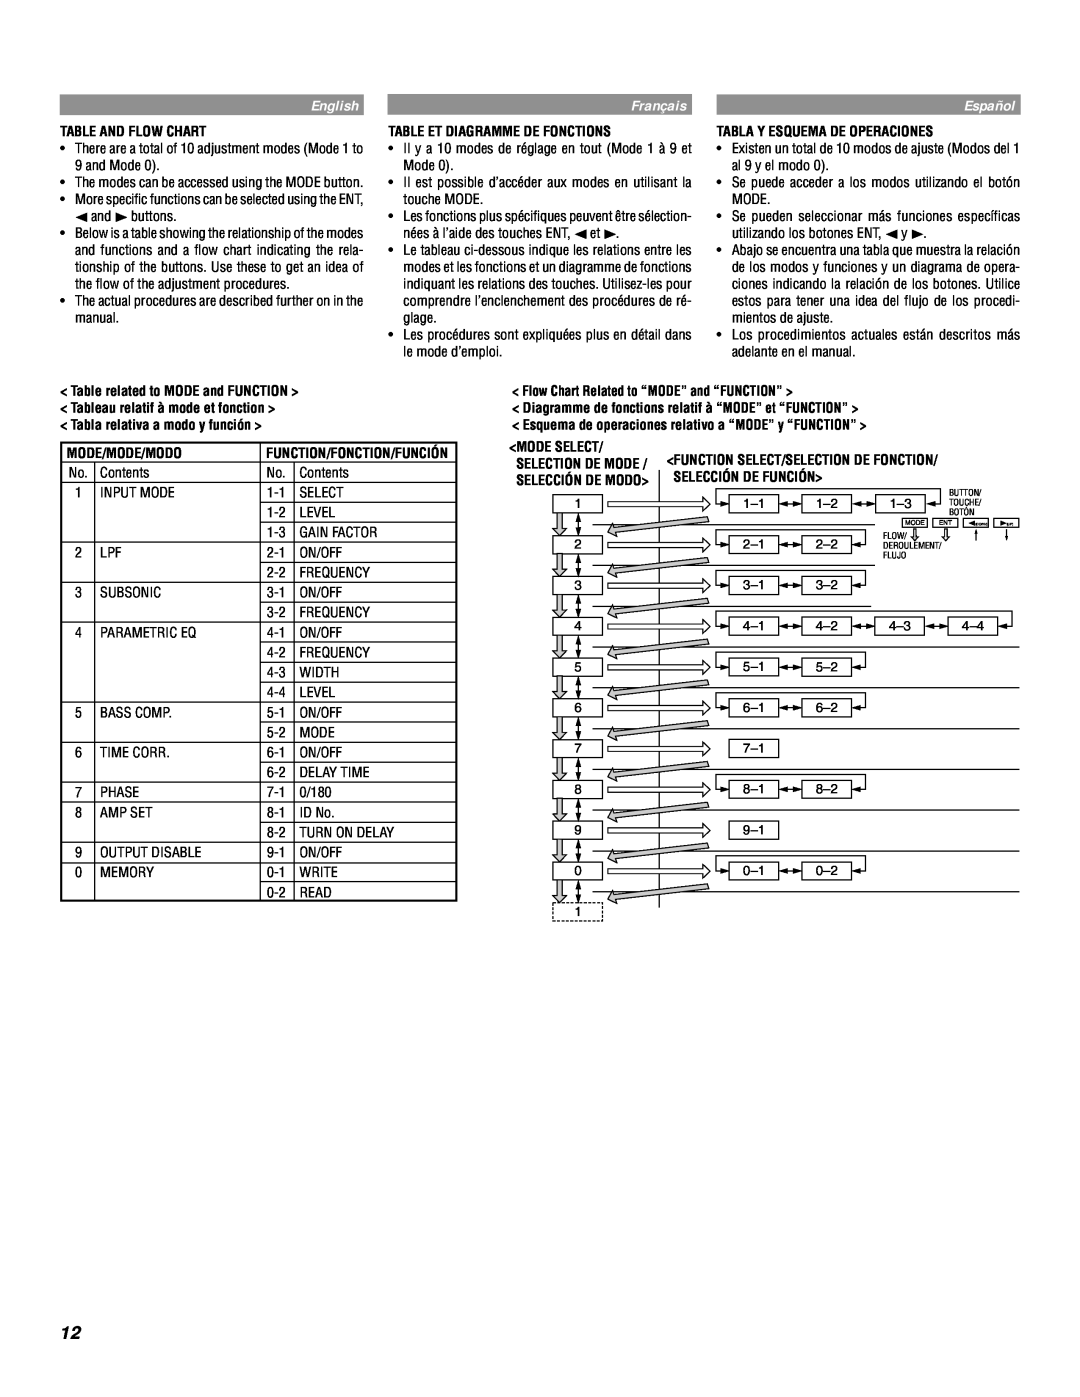 Alpine MRD-M1000 owner manual English, Français, Español, Table And Flow Chart 